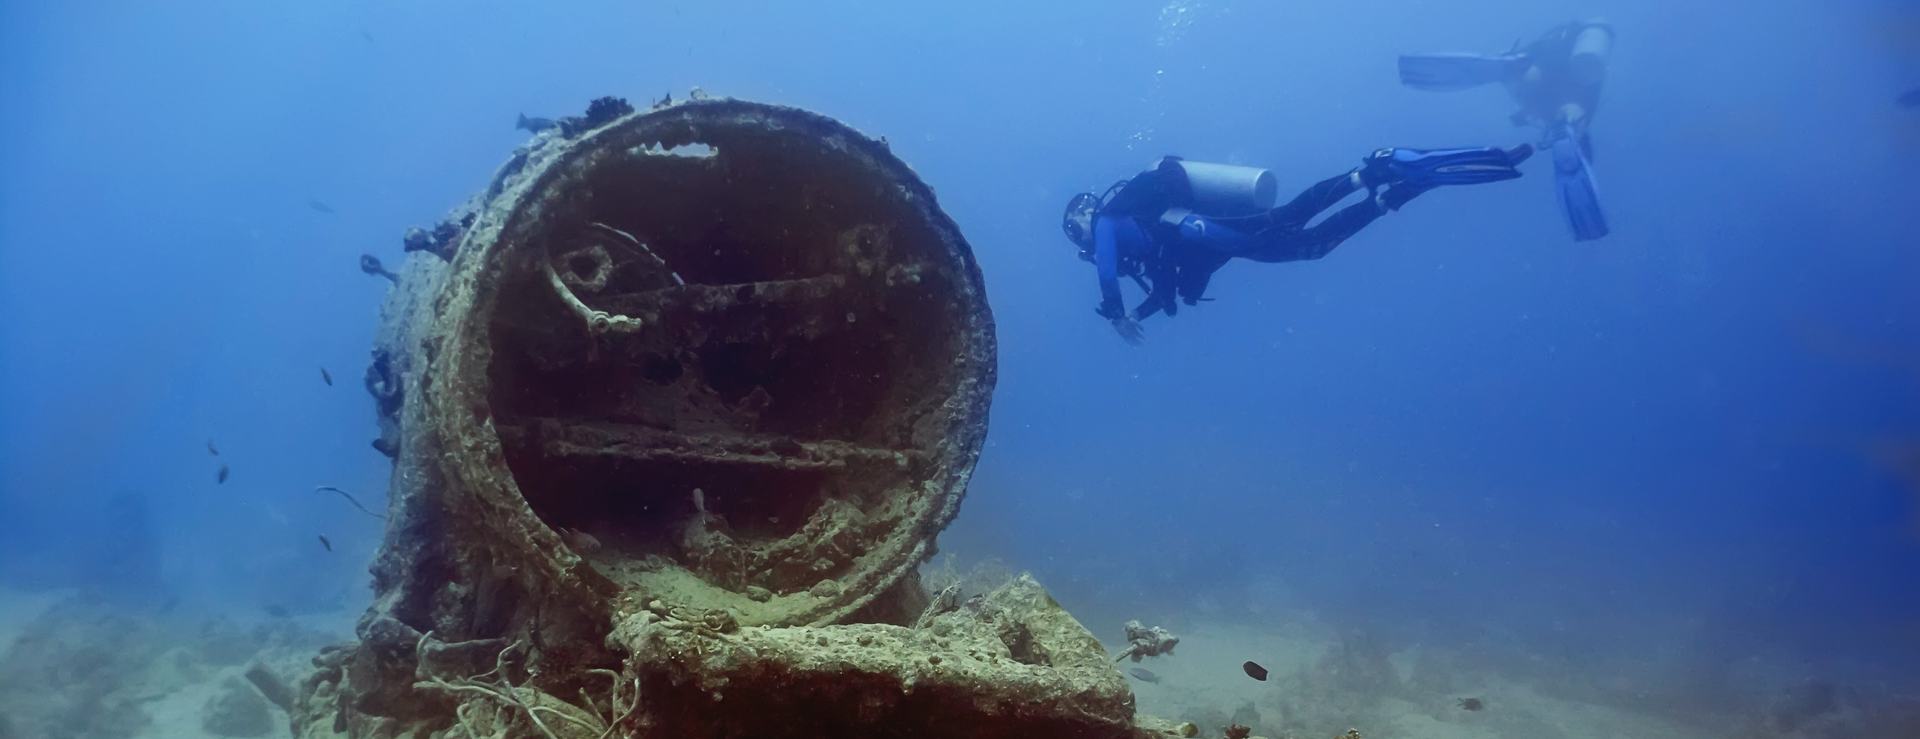 The SS Thistlegorm Wreck Image 1